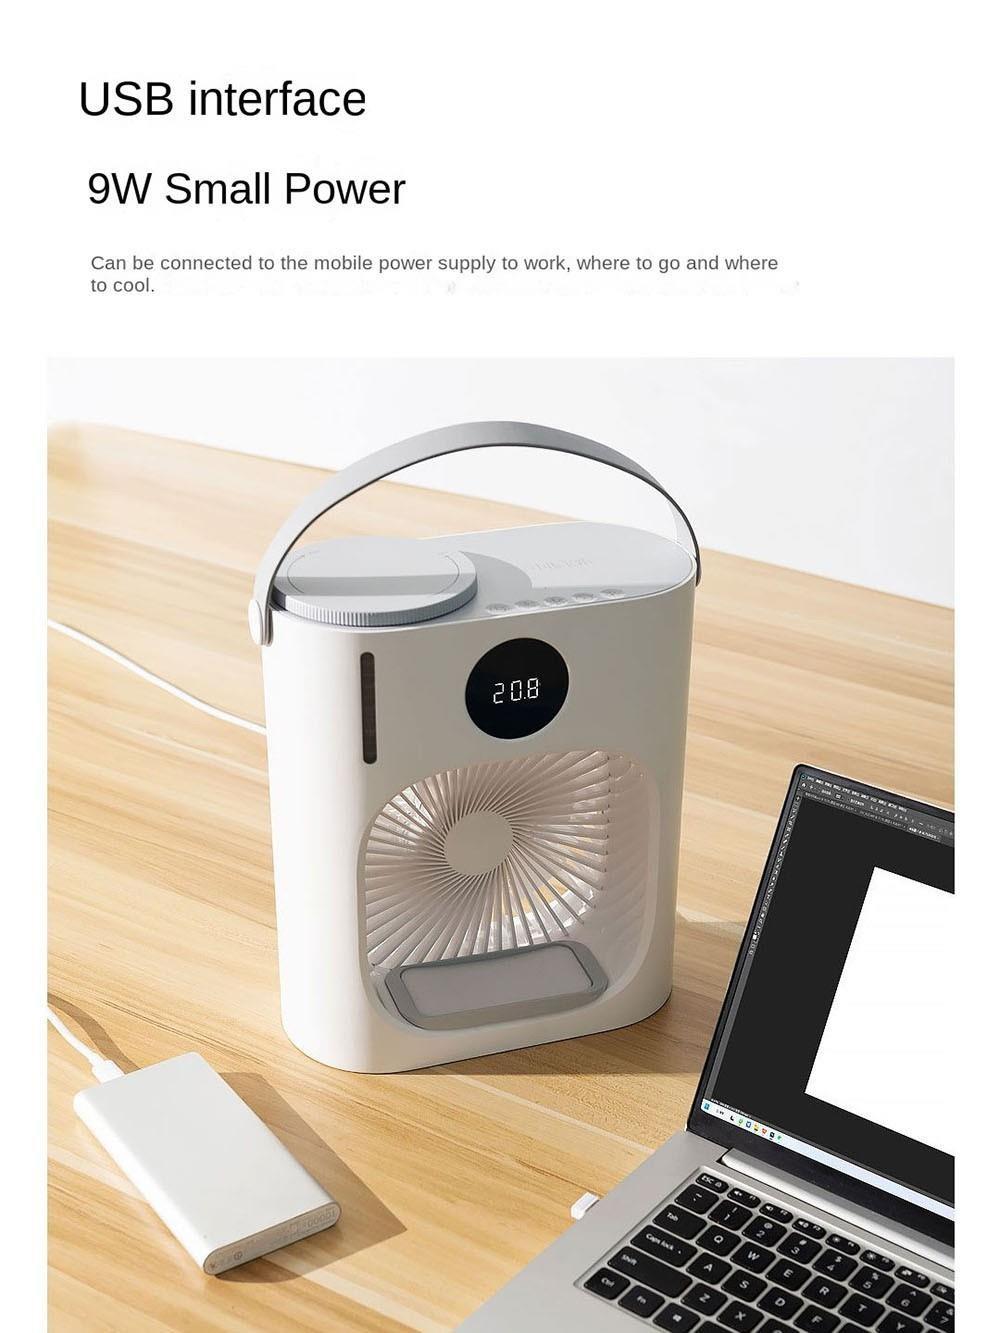 Xiaoda Feiyue Smart Desktop Cooling Fan, 3 Gänge Wind, zerstäubtes Wasser, 900ml Wassertank, Timing Funktion, LED Anzeige